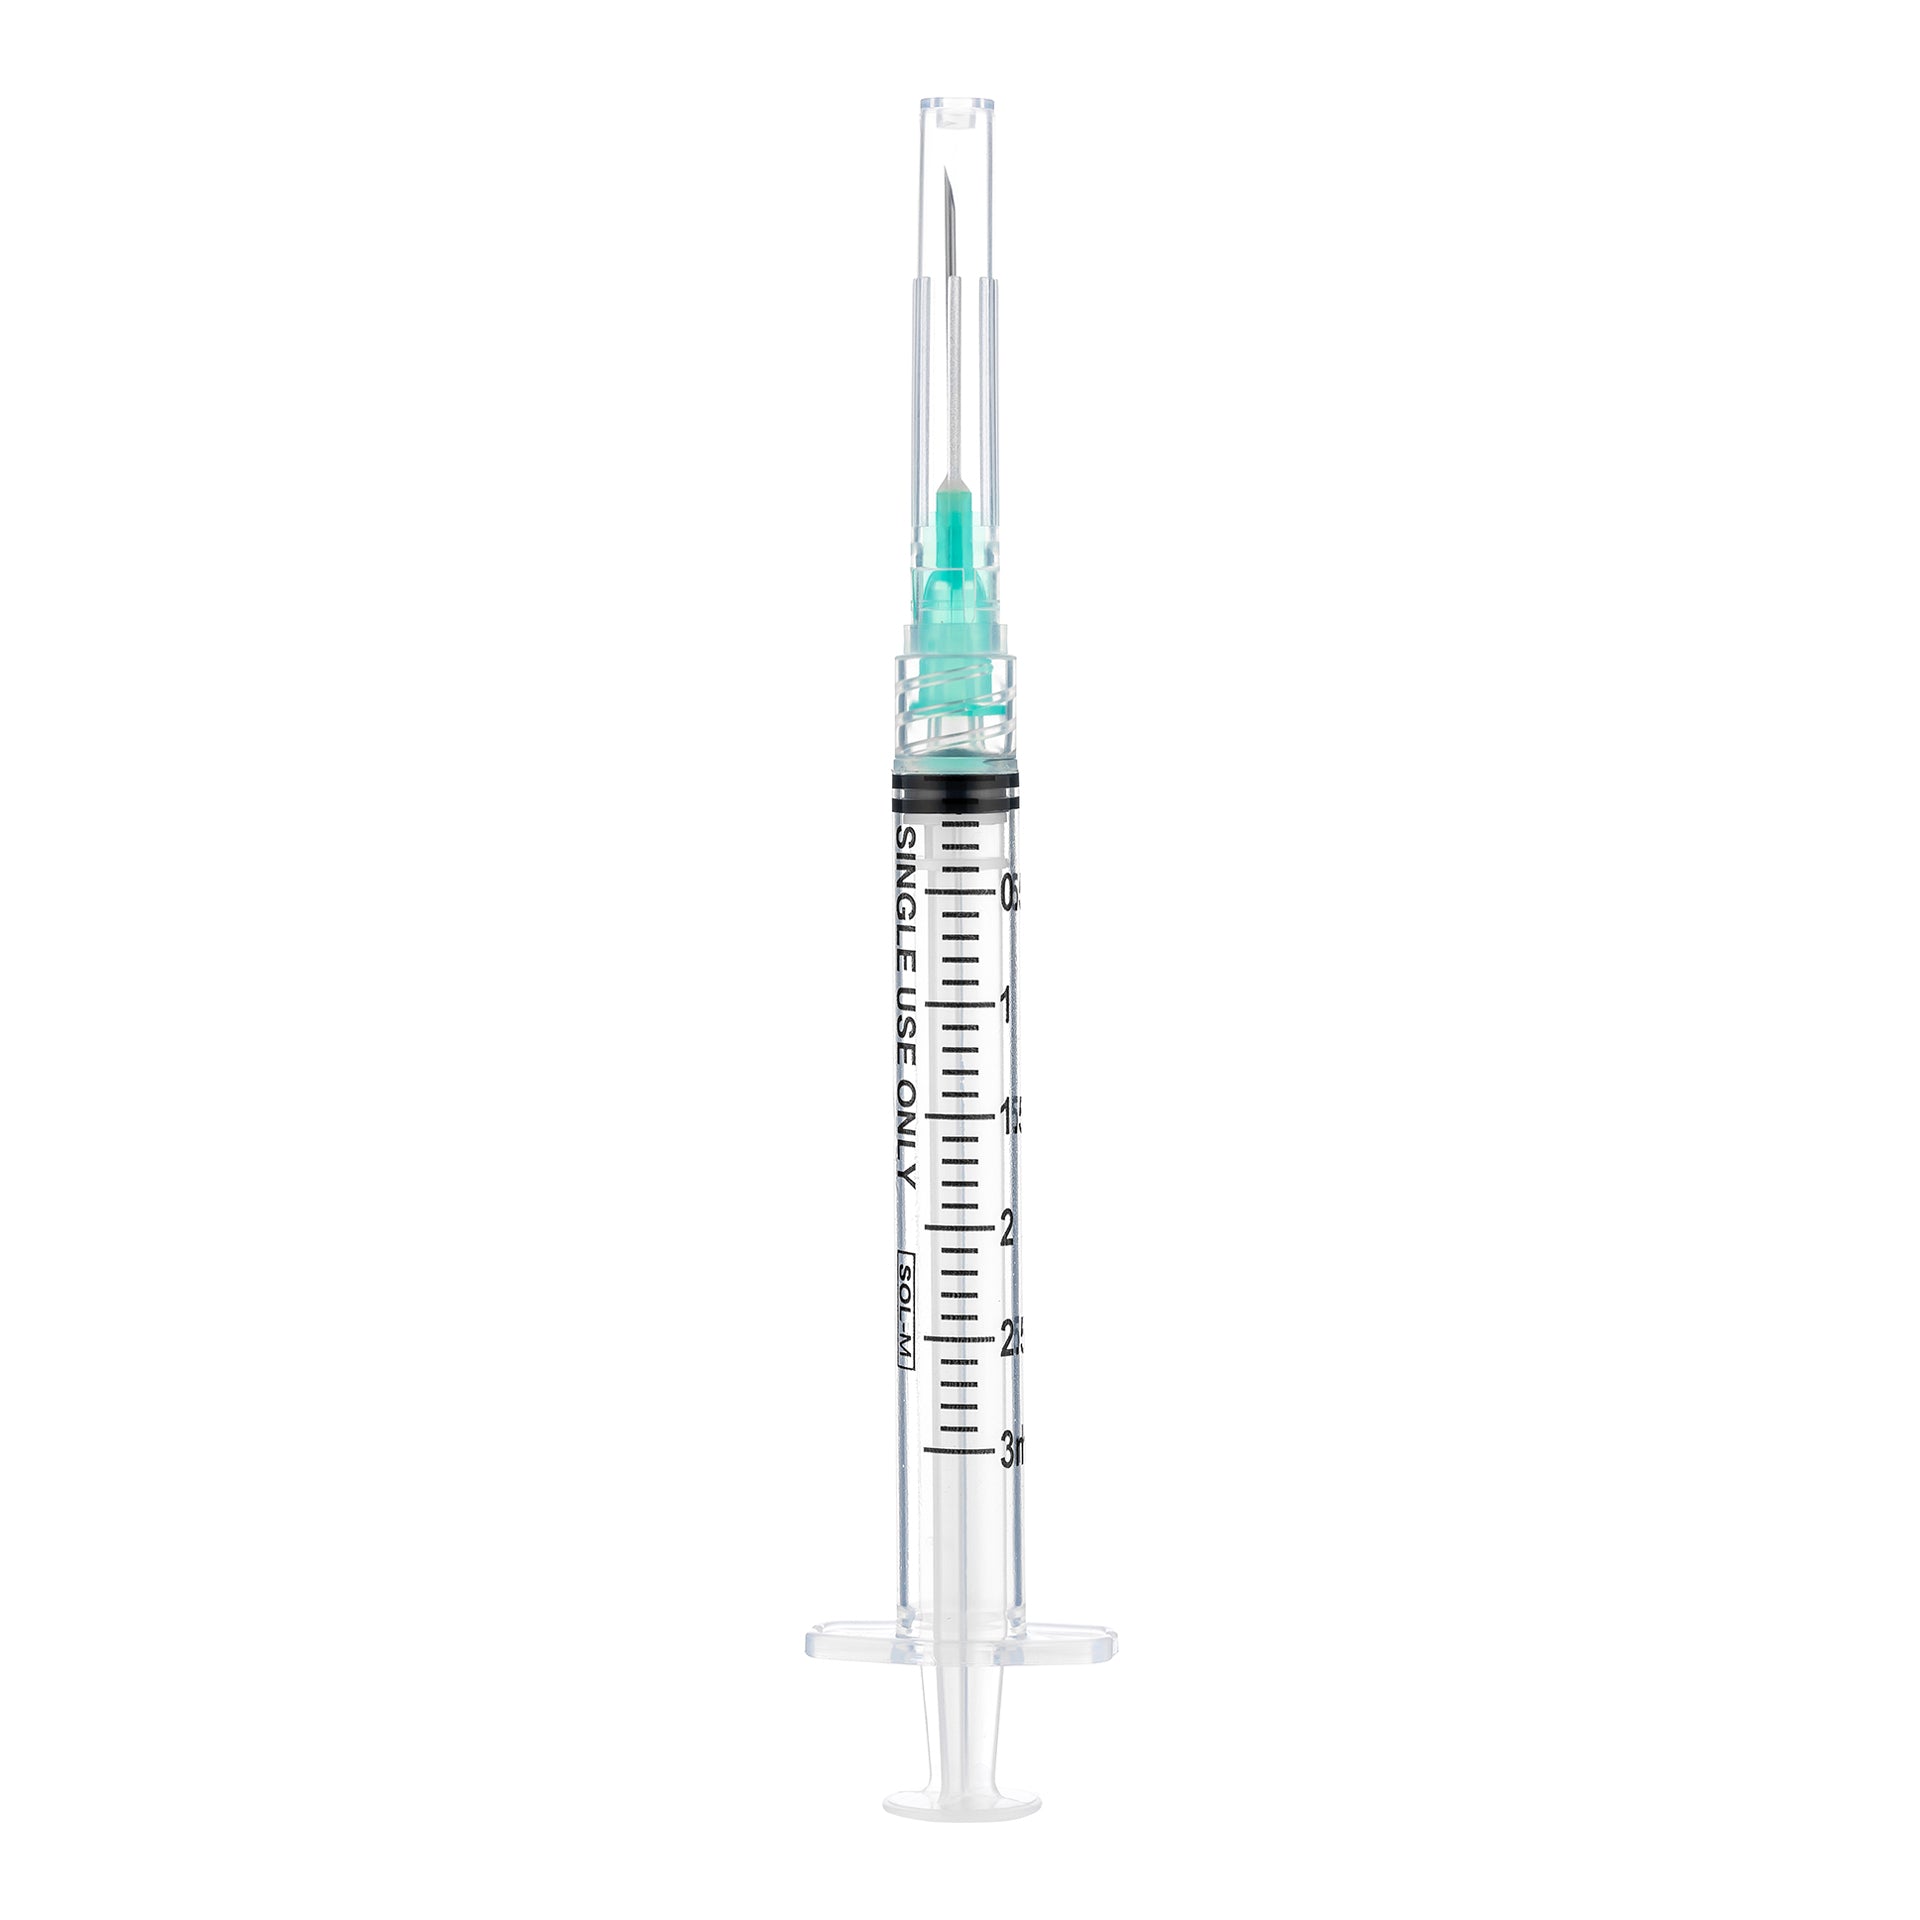 BX/10 - SOL-M 20ml Luer Lock Syringe Sterile Convenience Tray